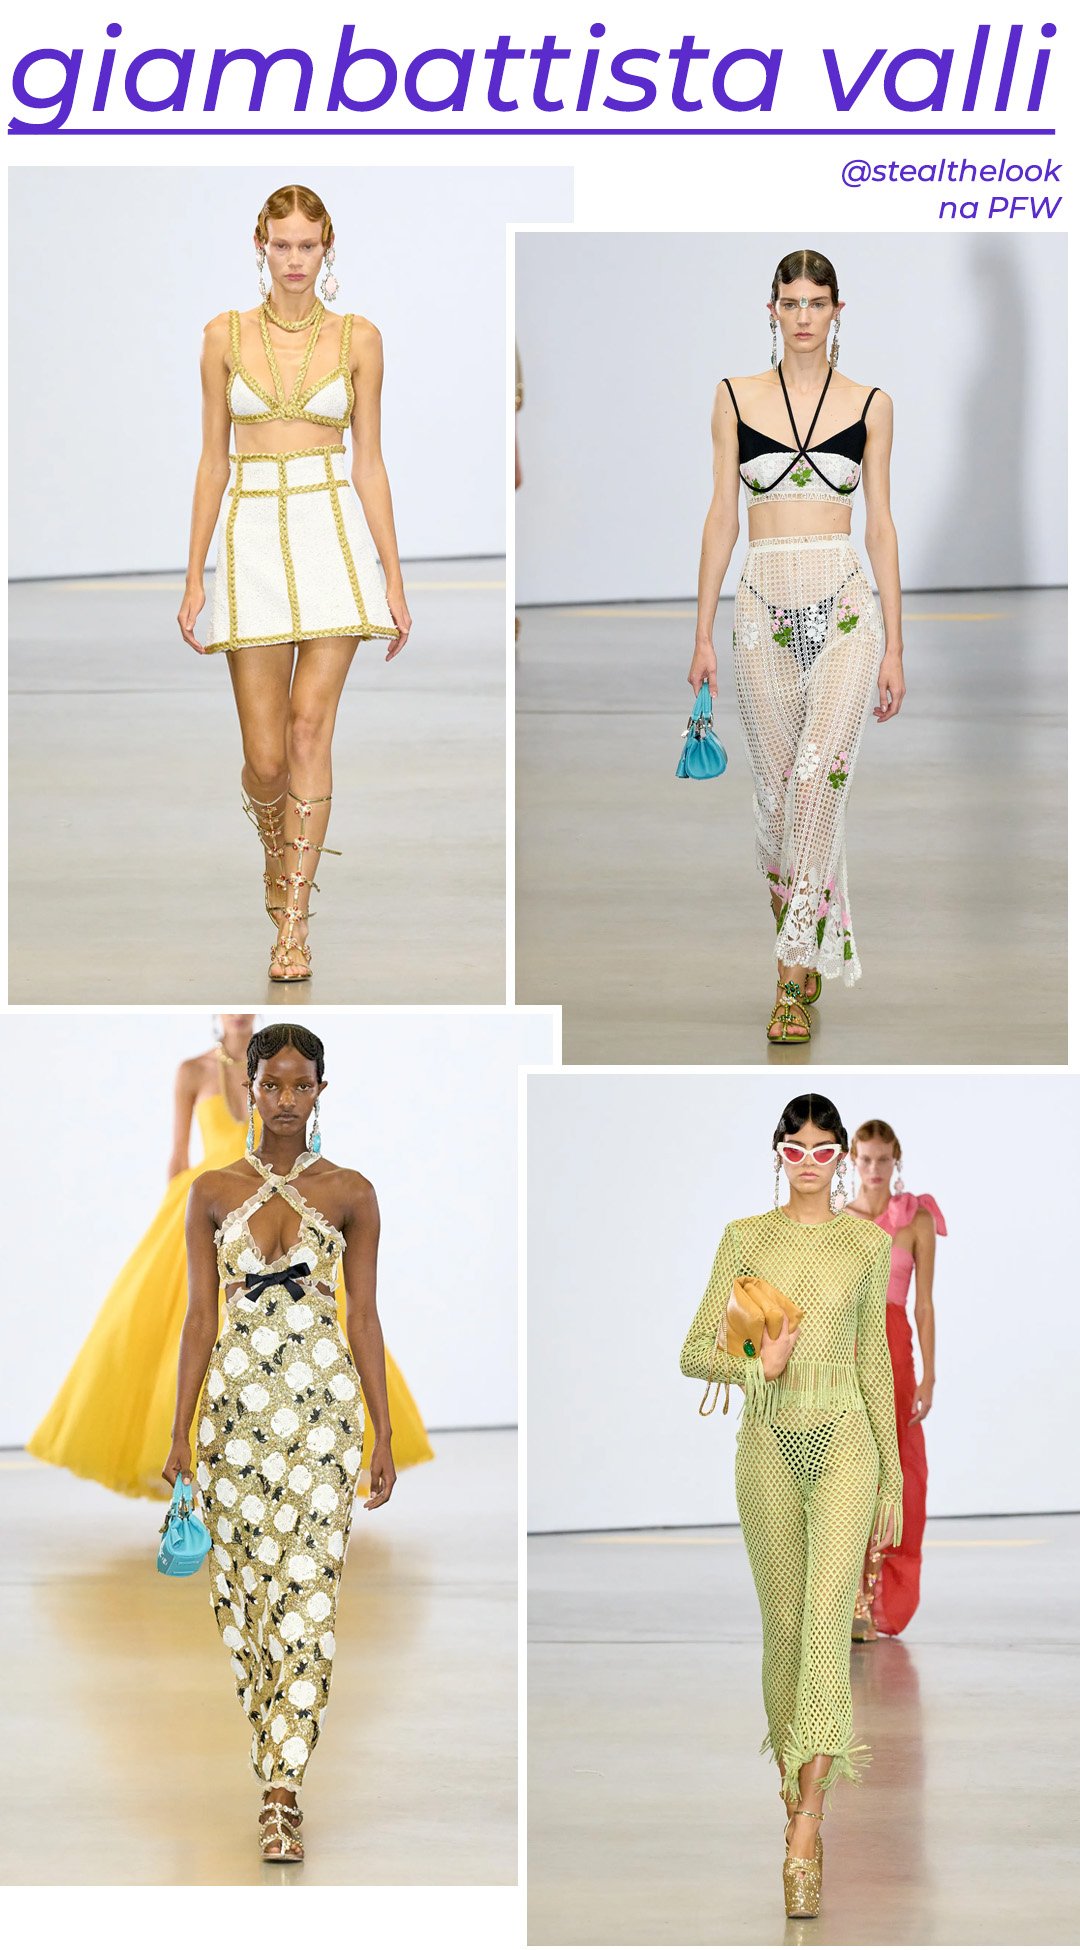 Giambattista Valli S/S 2023 - roupas diversas - Paris Fashion Week - Primavera - modelo andando pela passarela - https://stealthelook.com.br